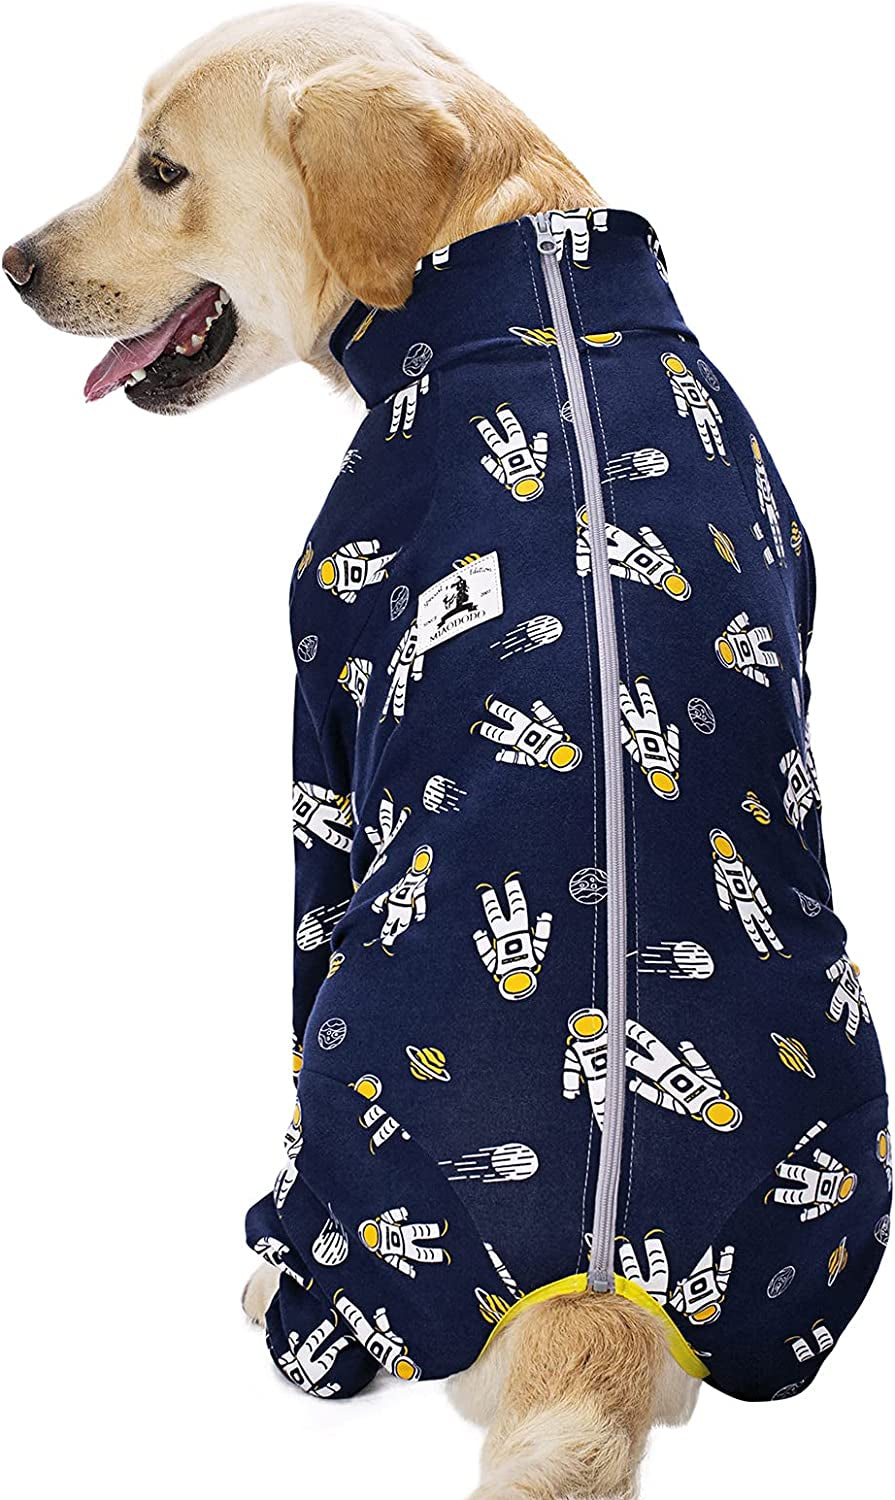 Miaododo Cotton Large Dog Pajamas Strawberry Printing,Full Belly